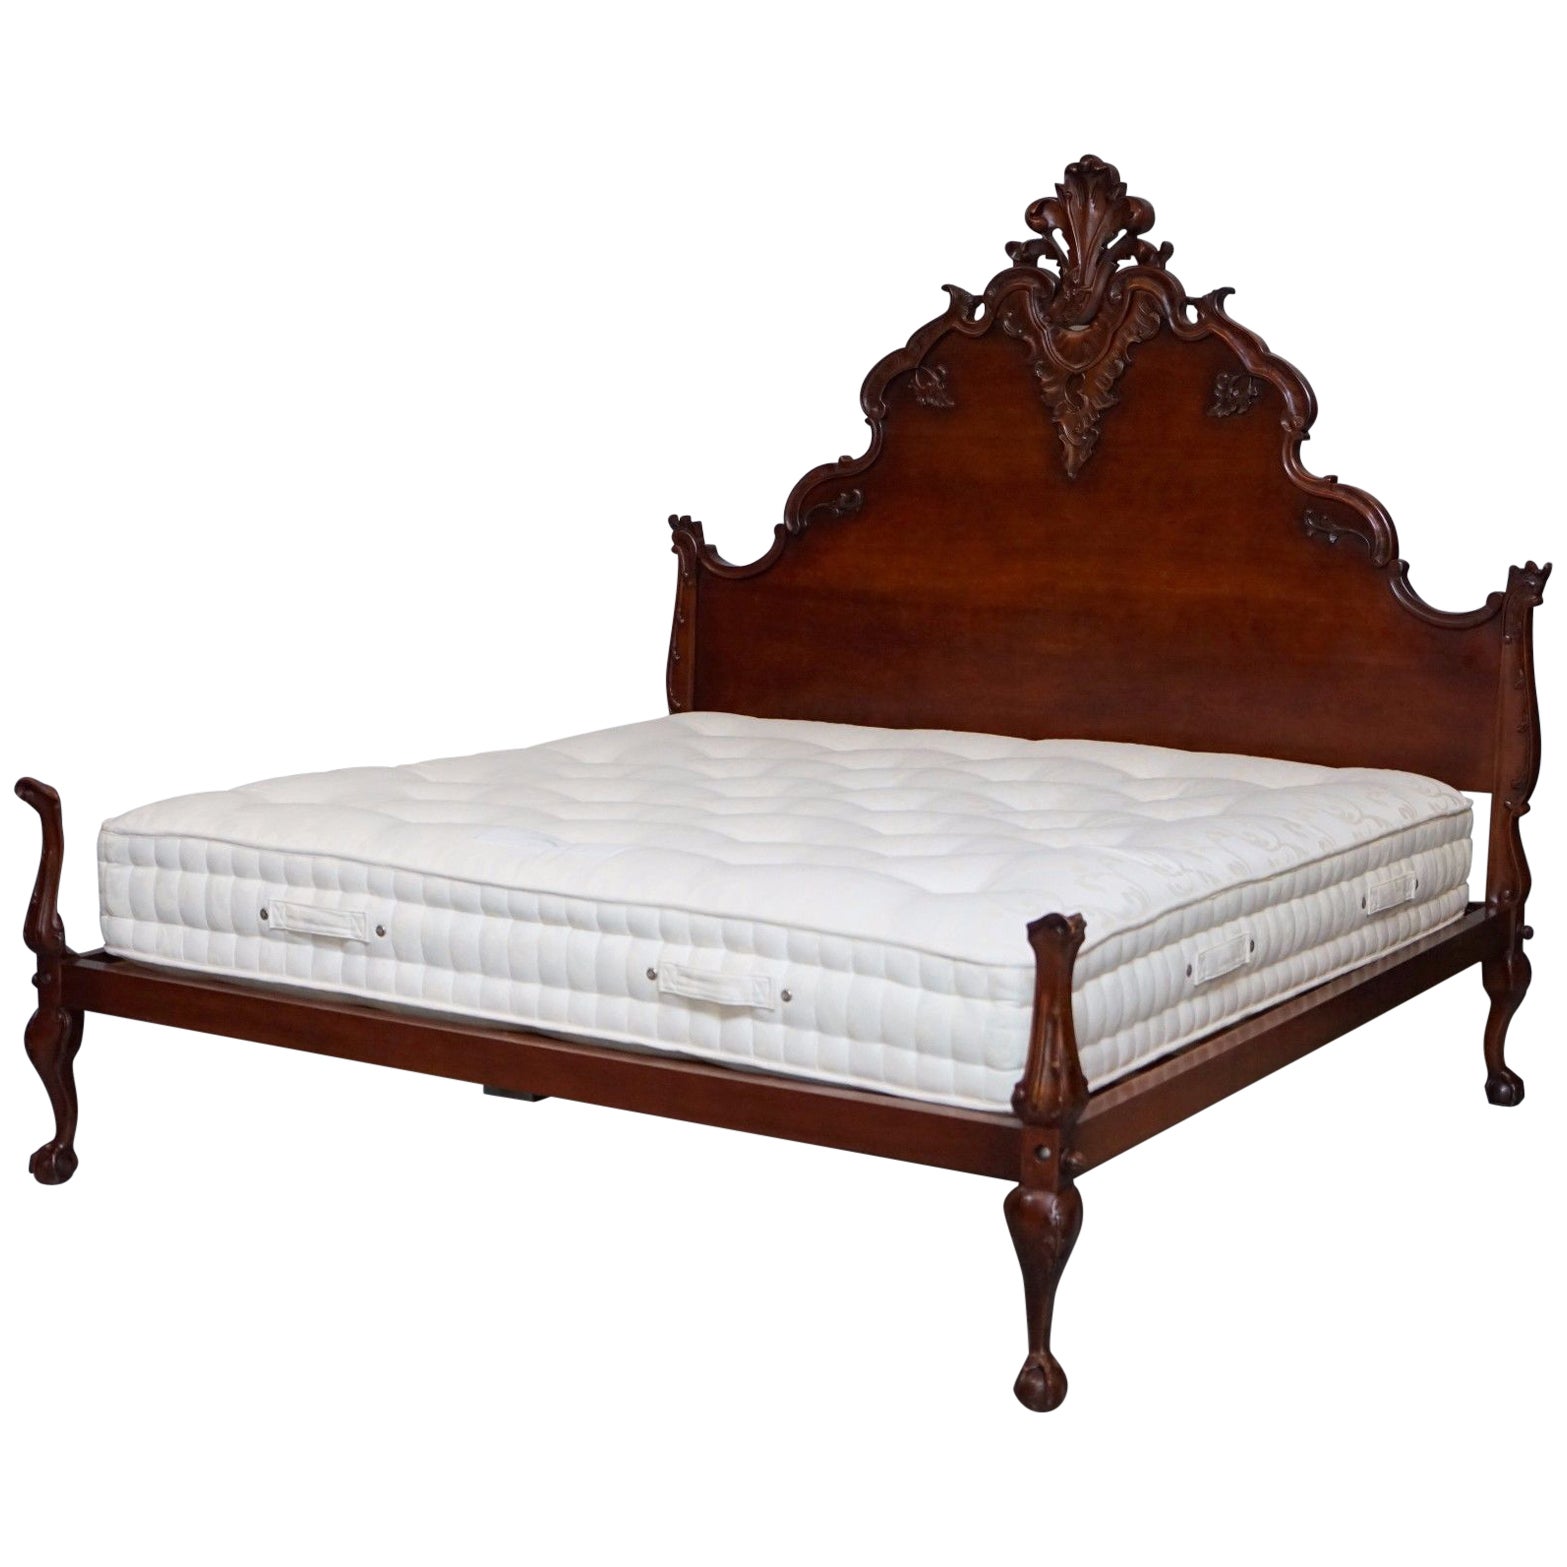 Ralph Lauren King Bed - For Sale on 1stDibs | ralph lauren beds, ralph  lauren king size bed, ralph lauren bed frame